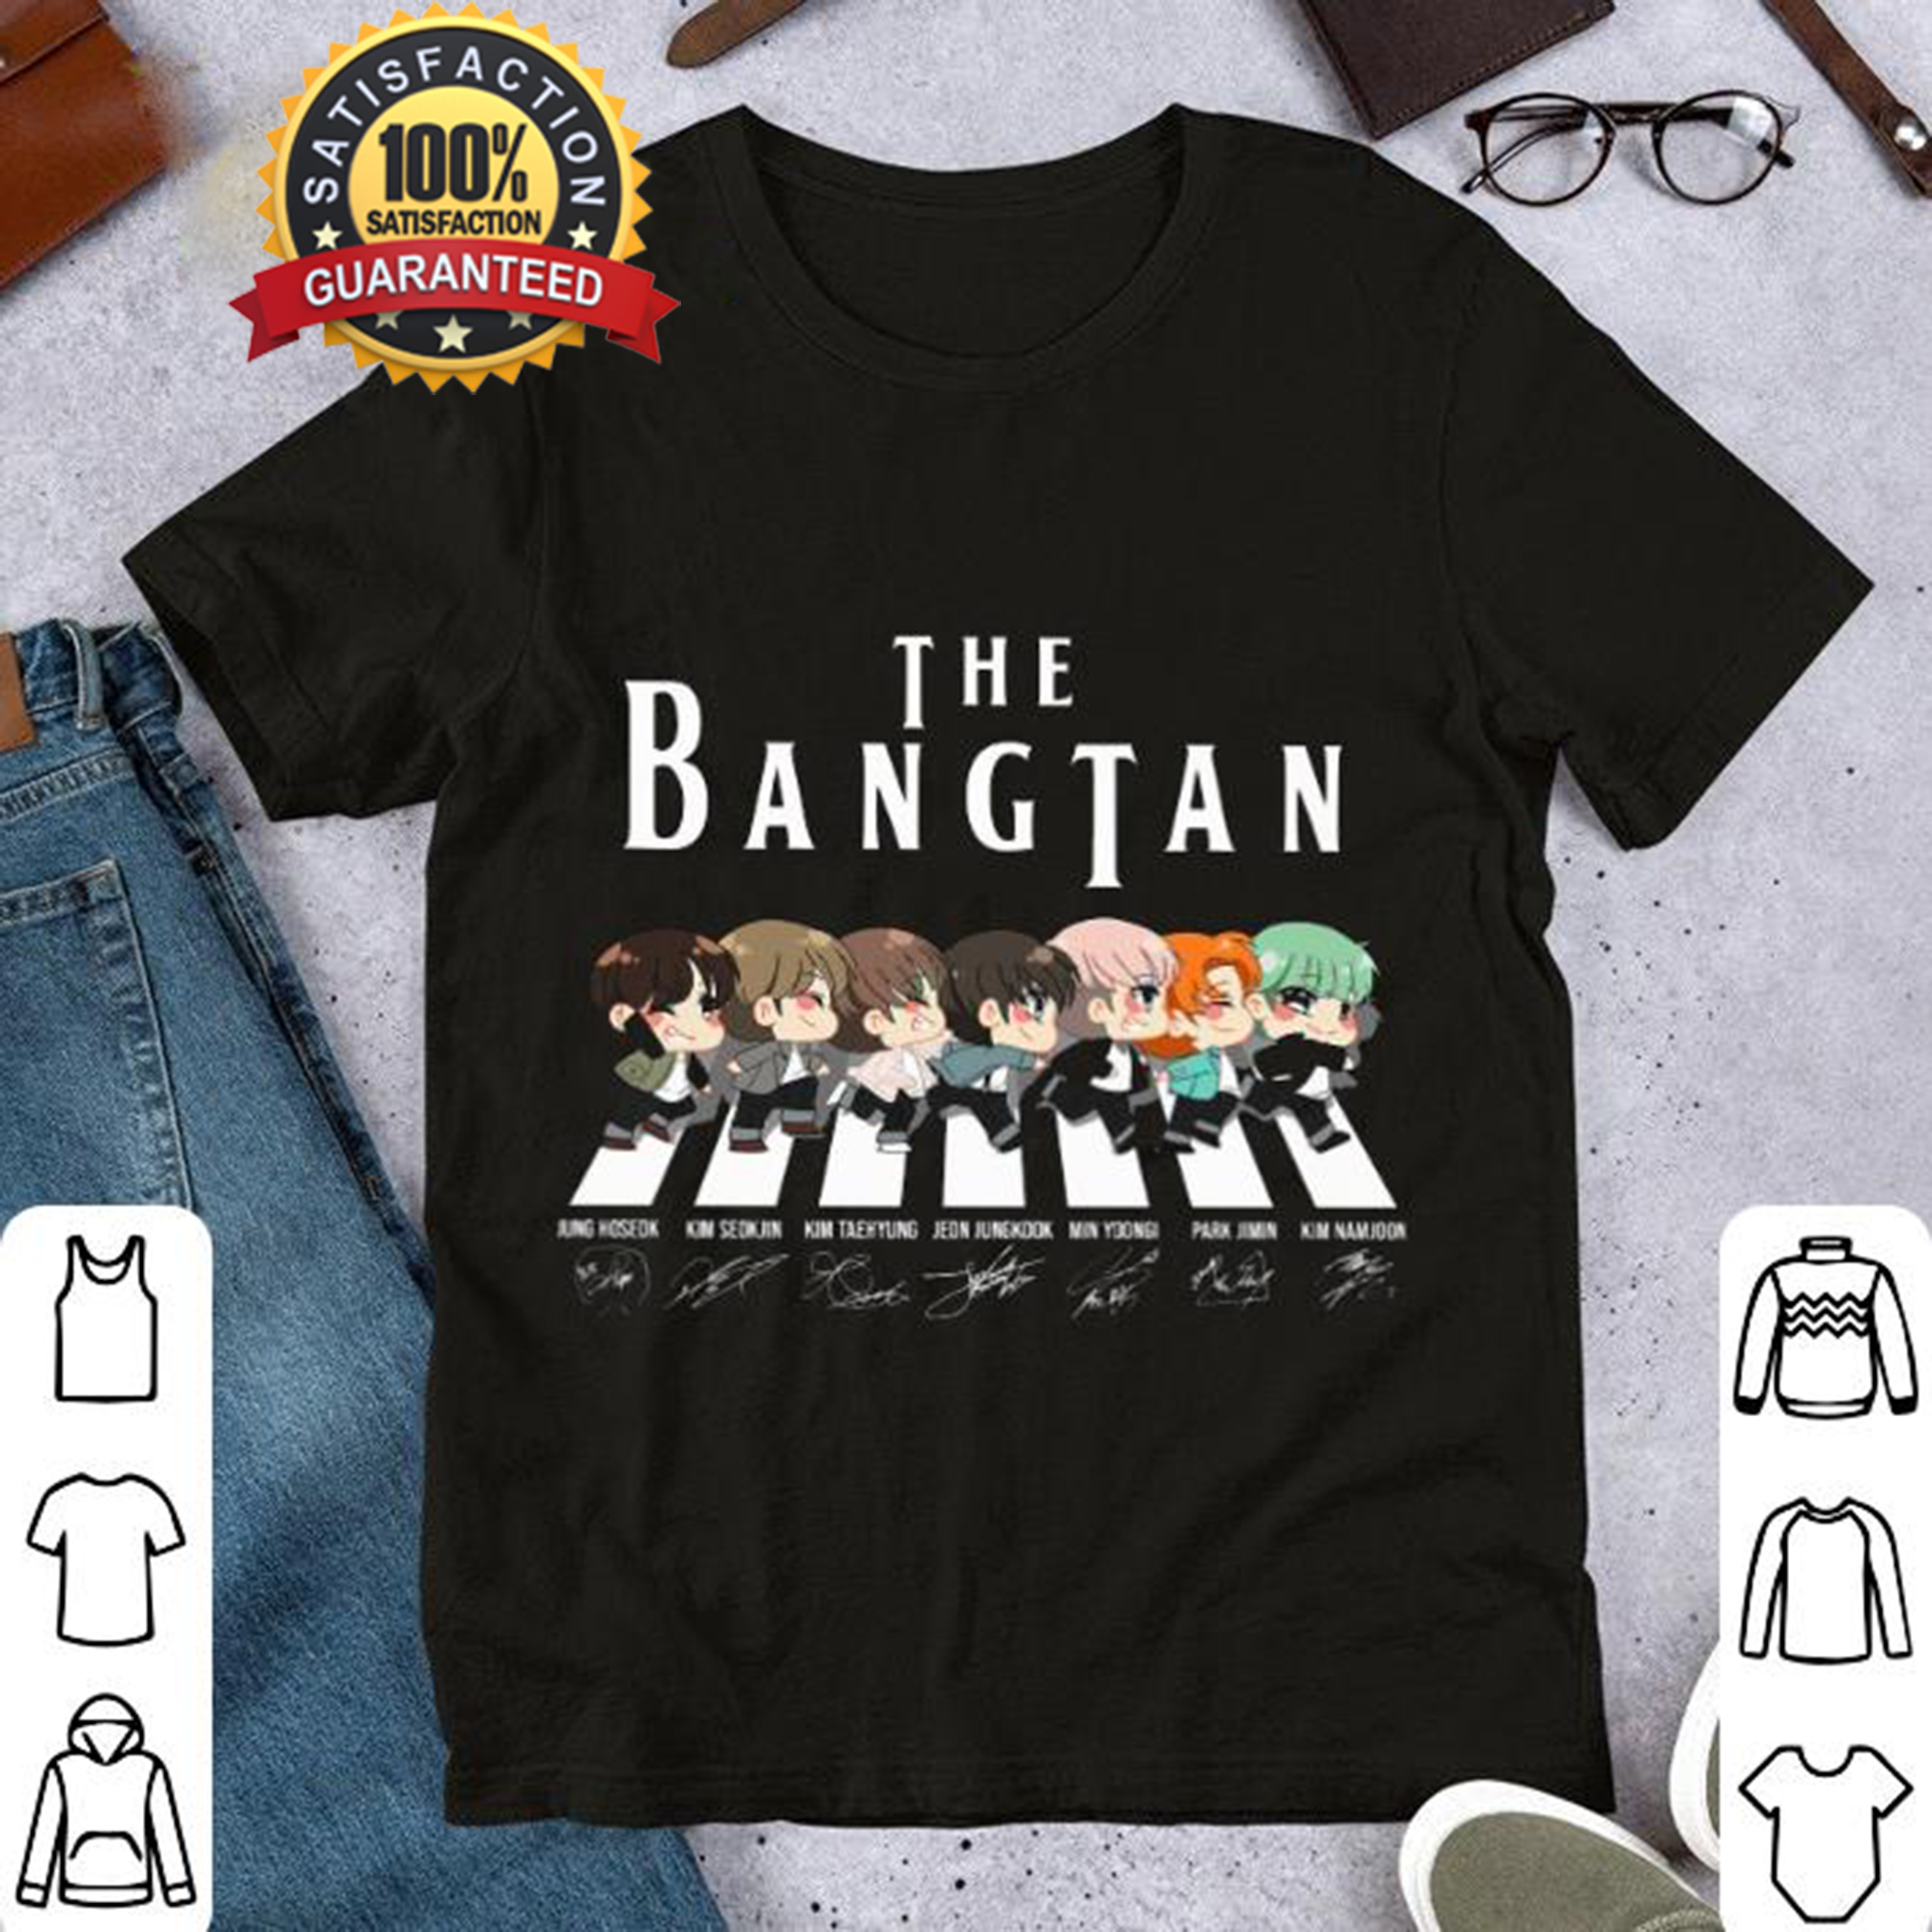 BTS The Bangtan Abbey Road Signatures shirt